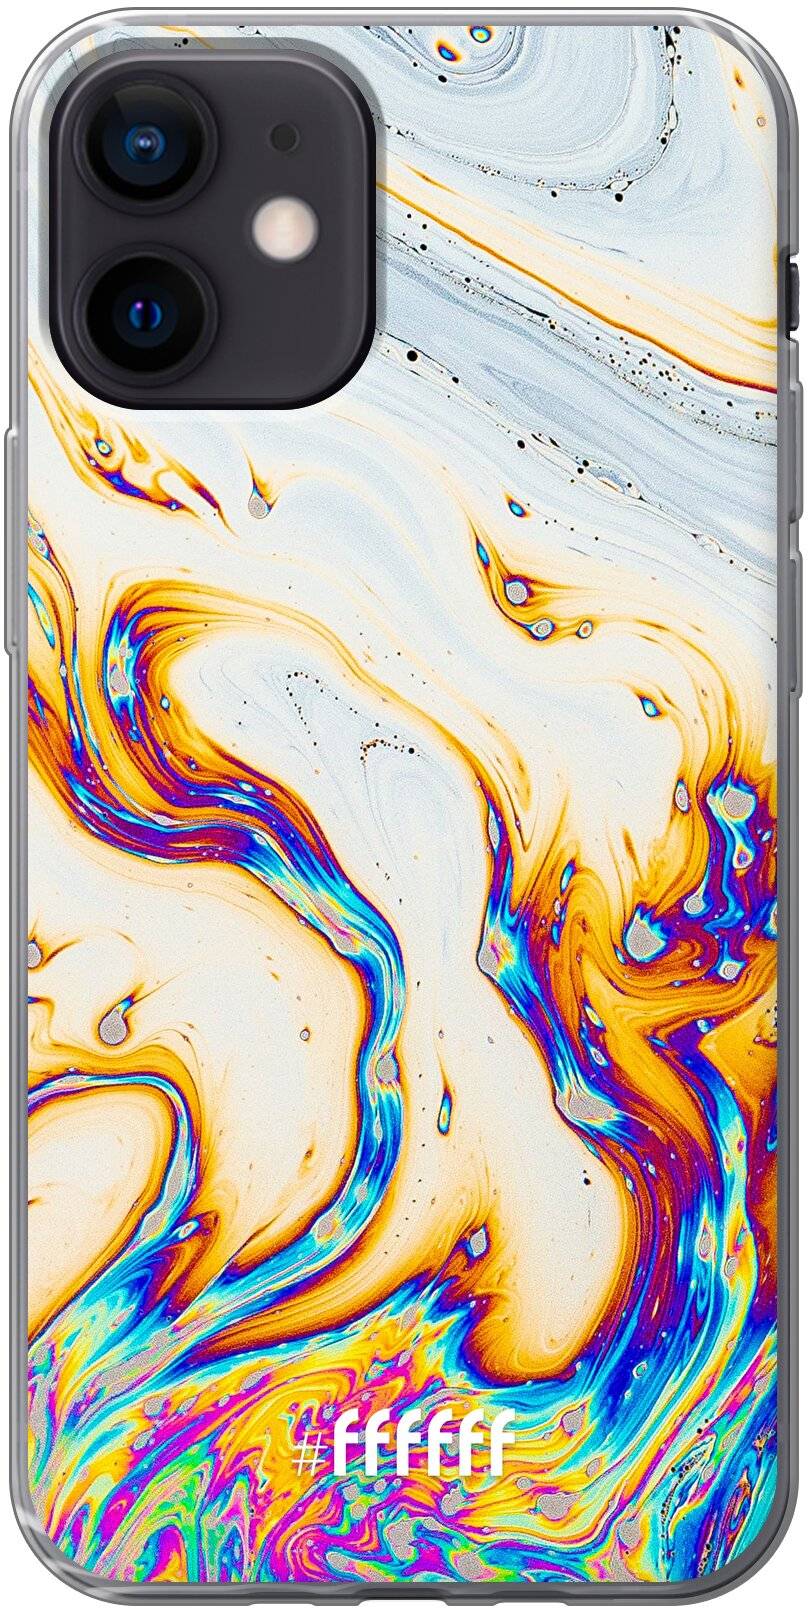 Bubble Texture iPhone 12 Mini